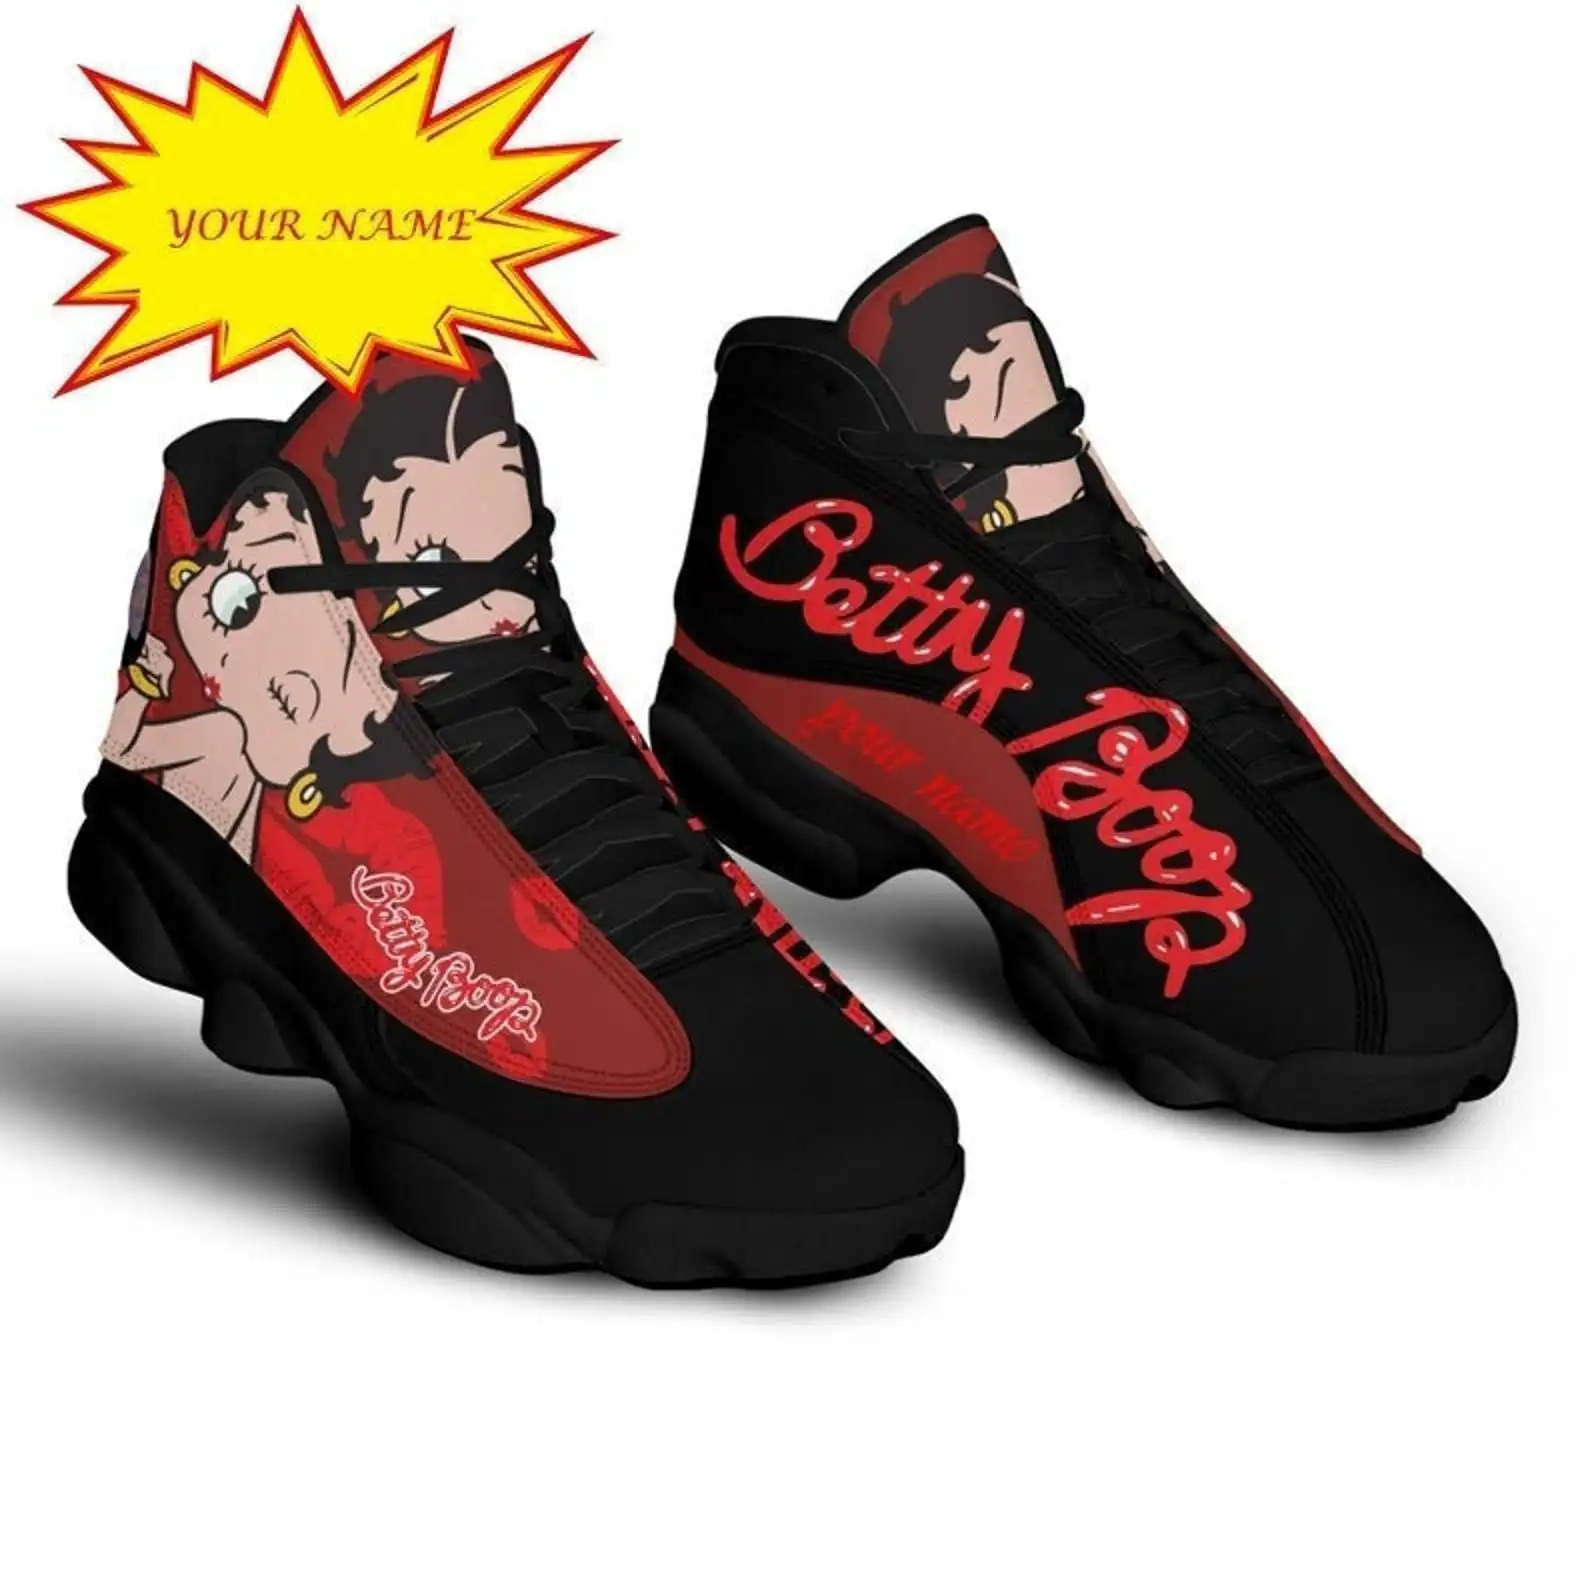 Betty Boop Personalized Air Jordan Shoes